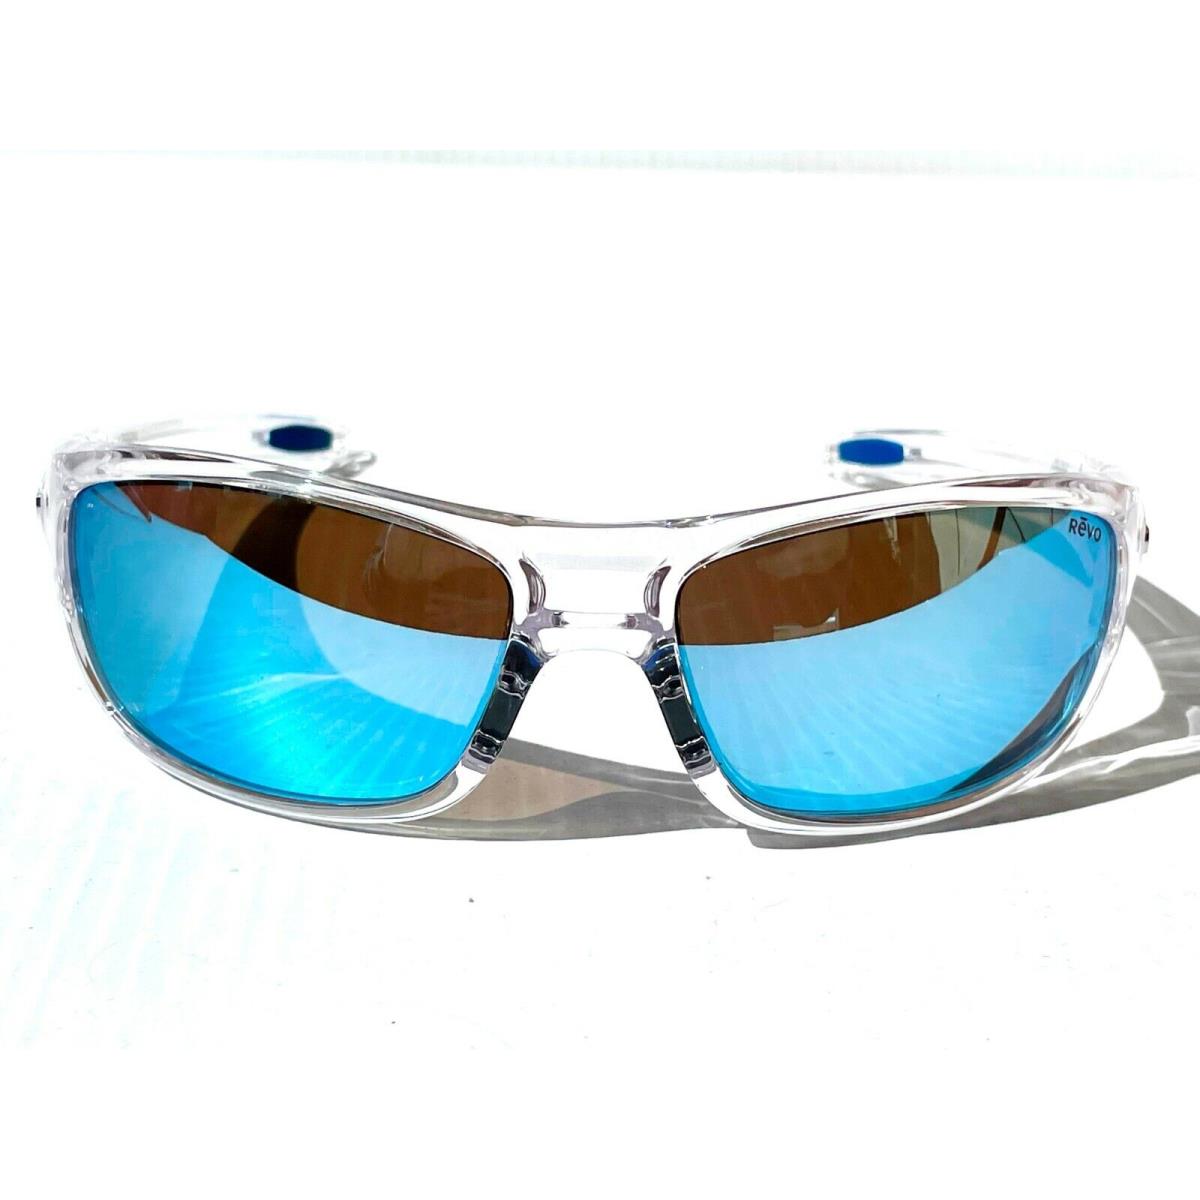 Revo sunglasses JEEP COAST - Clear Frame, Blue Lens